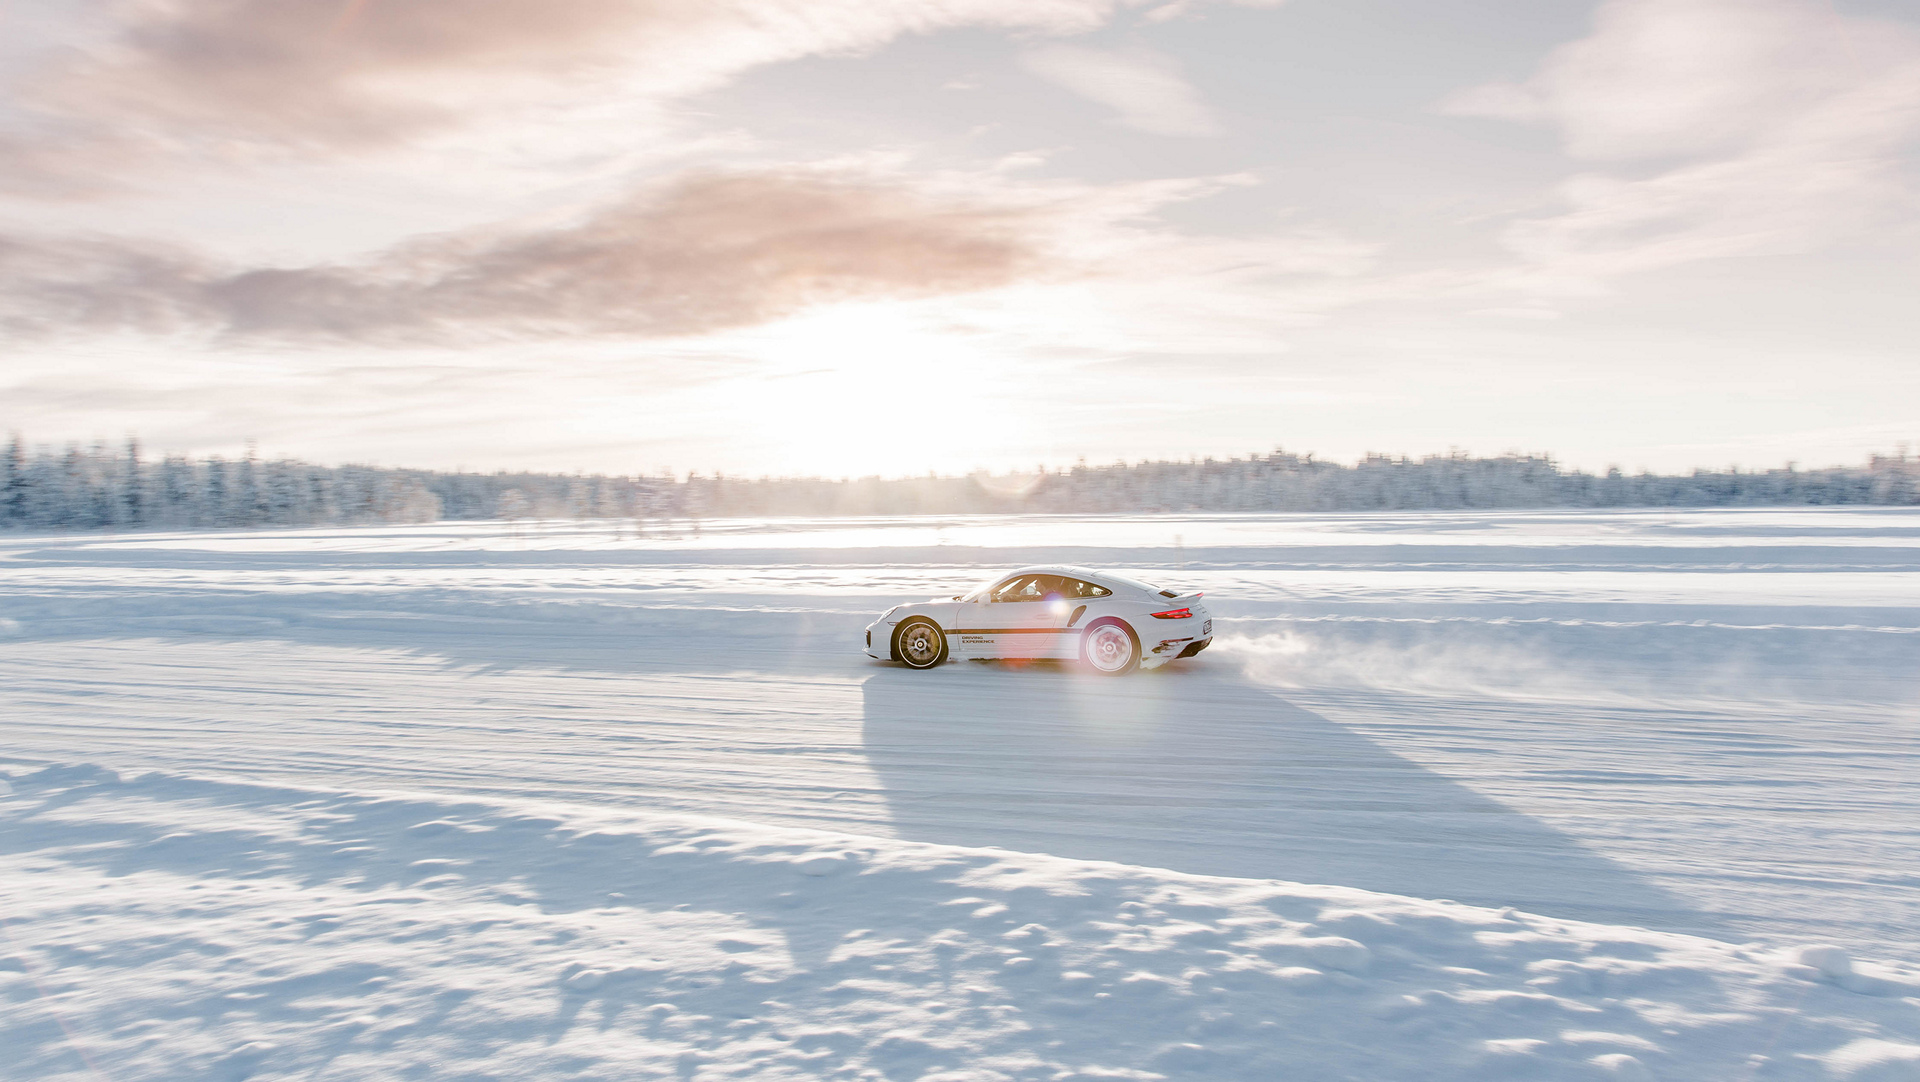 911 Turbo S, Porsche Driving Experience Winter, Levi, Finland © Dr. Ing. h.c. F. Porsche AG 